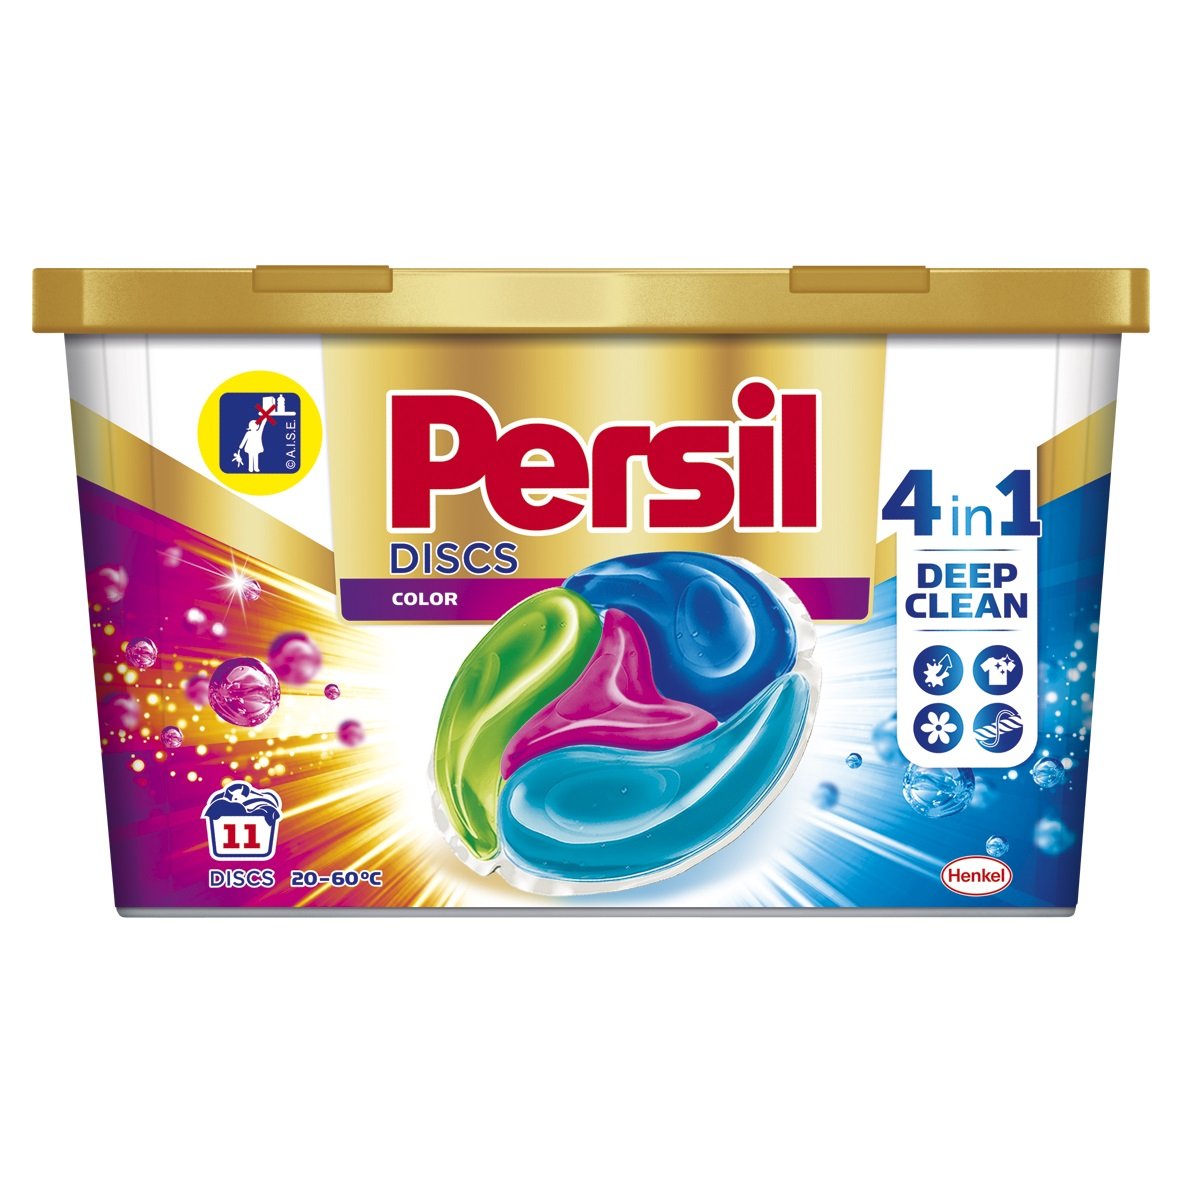 Диски для стирки Persil Color 4 in 1 Discs Deep Clean Plus Active Fresh, 11 шт. (796702) - фото 1